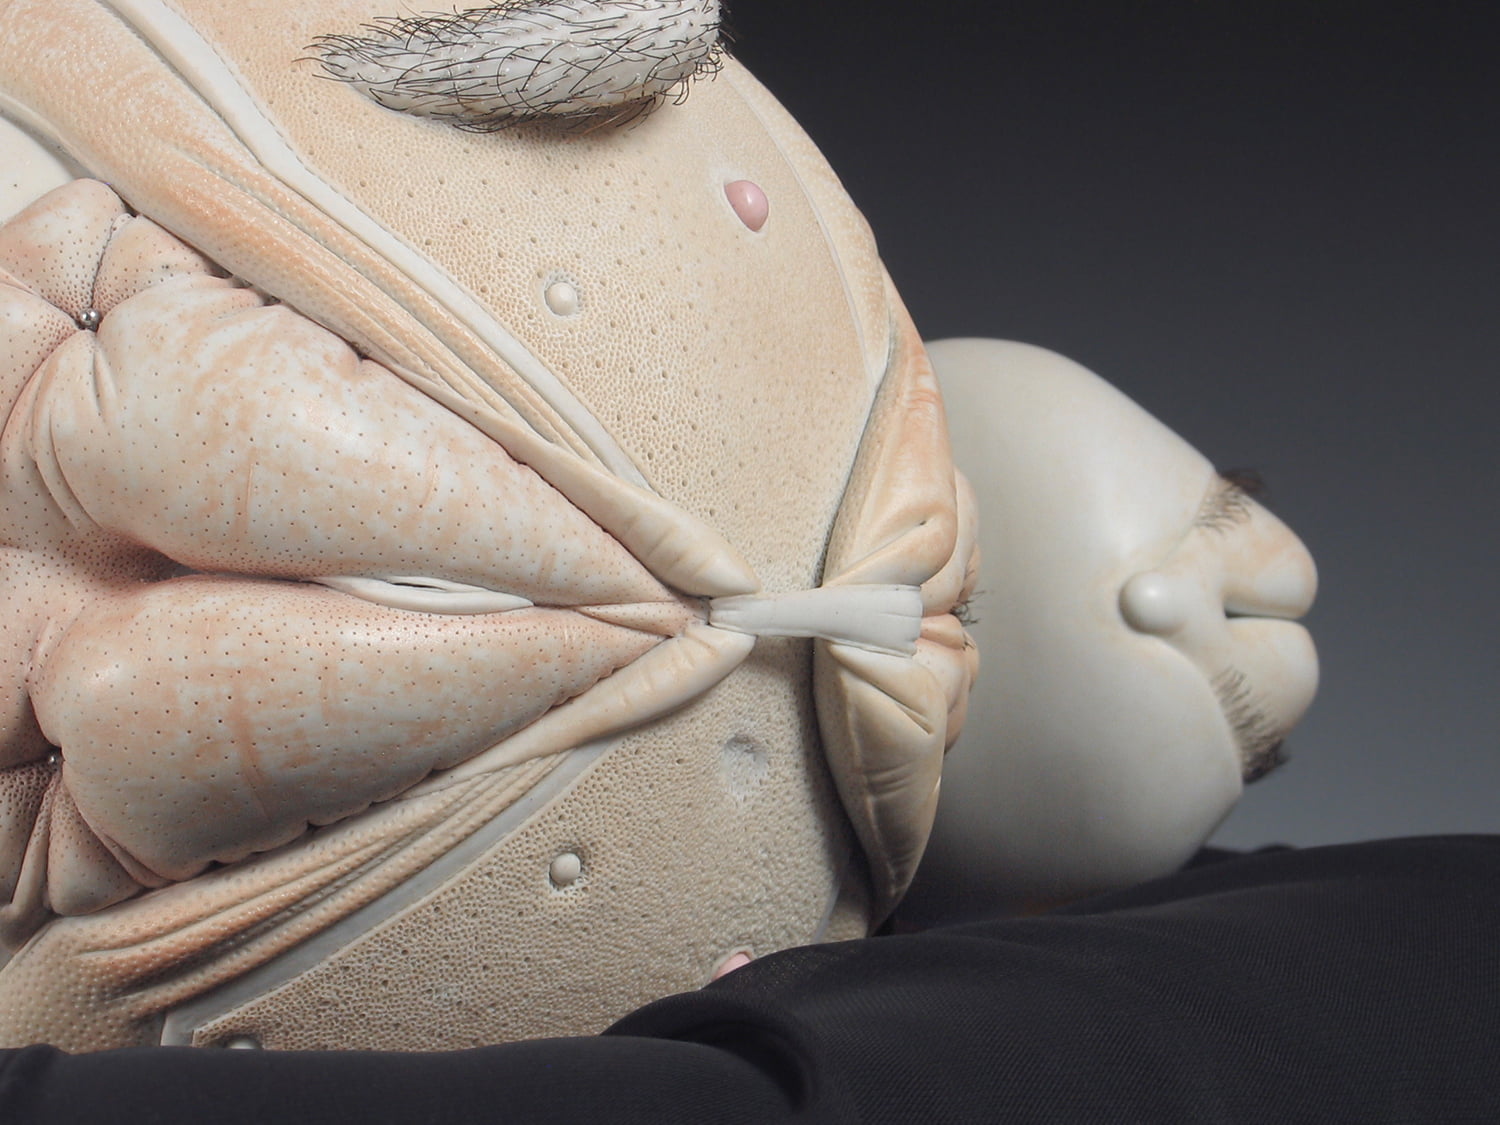 Jason Briggs "Baby" (detail 1). Porcelain, hair, and mixed media sculptural ceramic art.